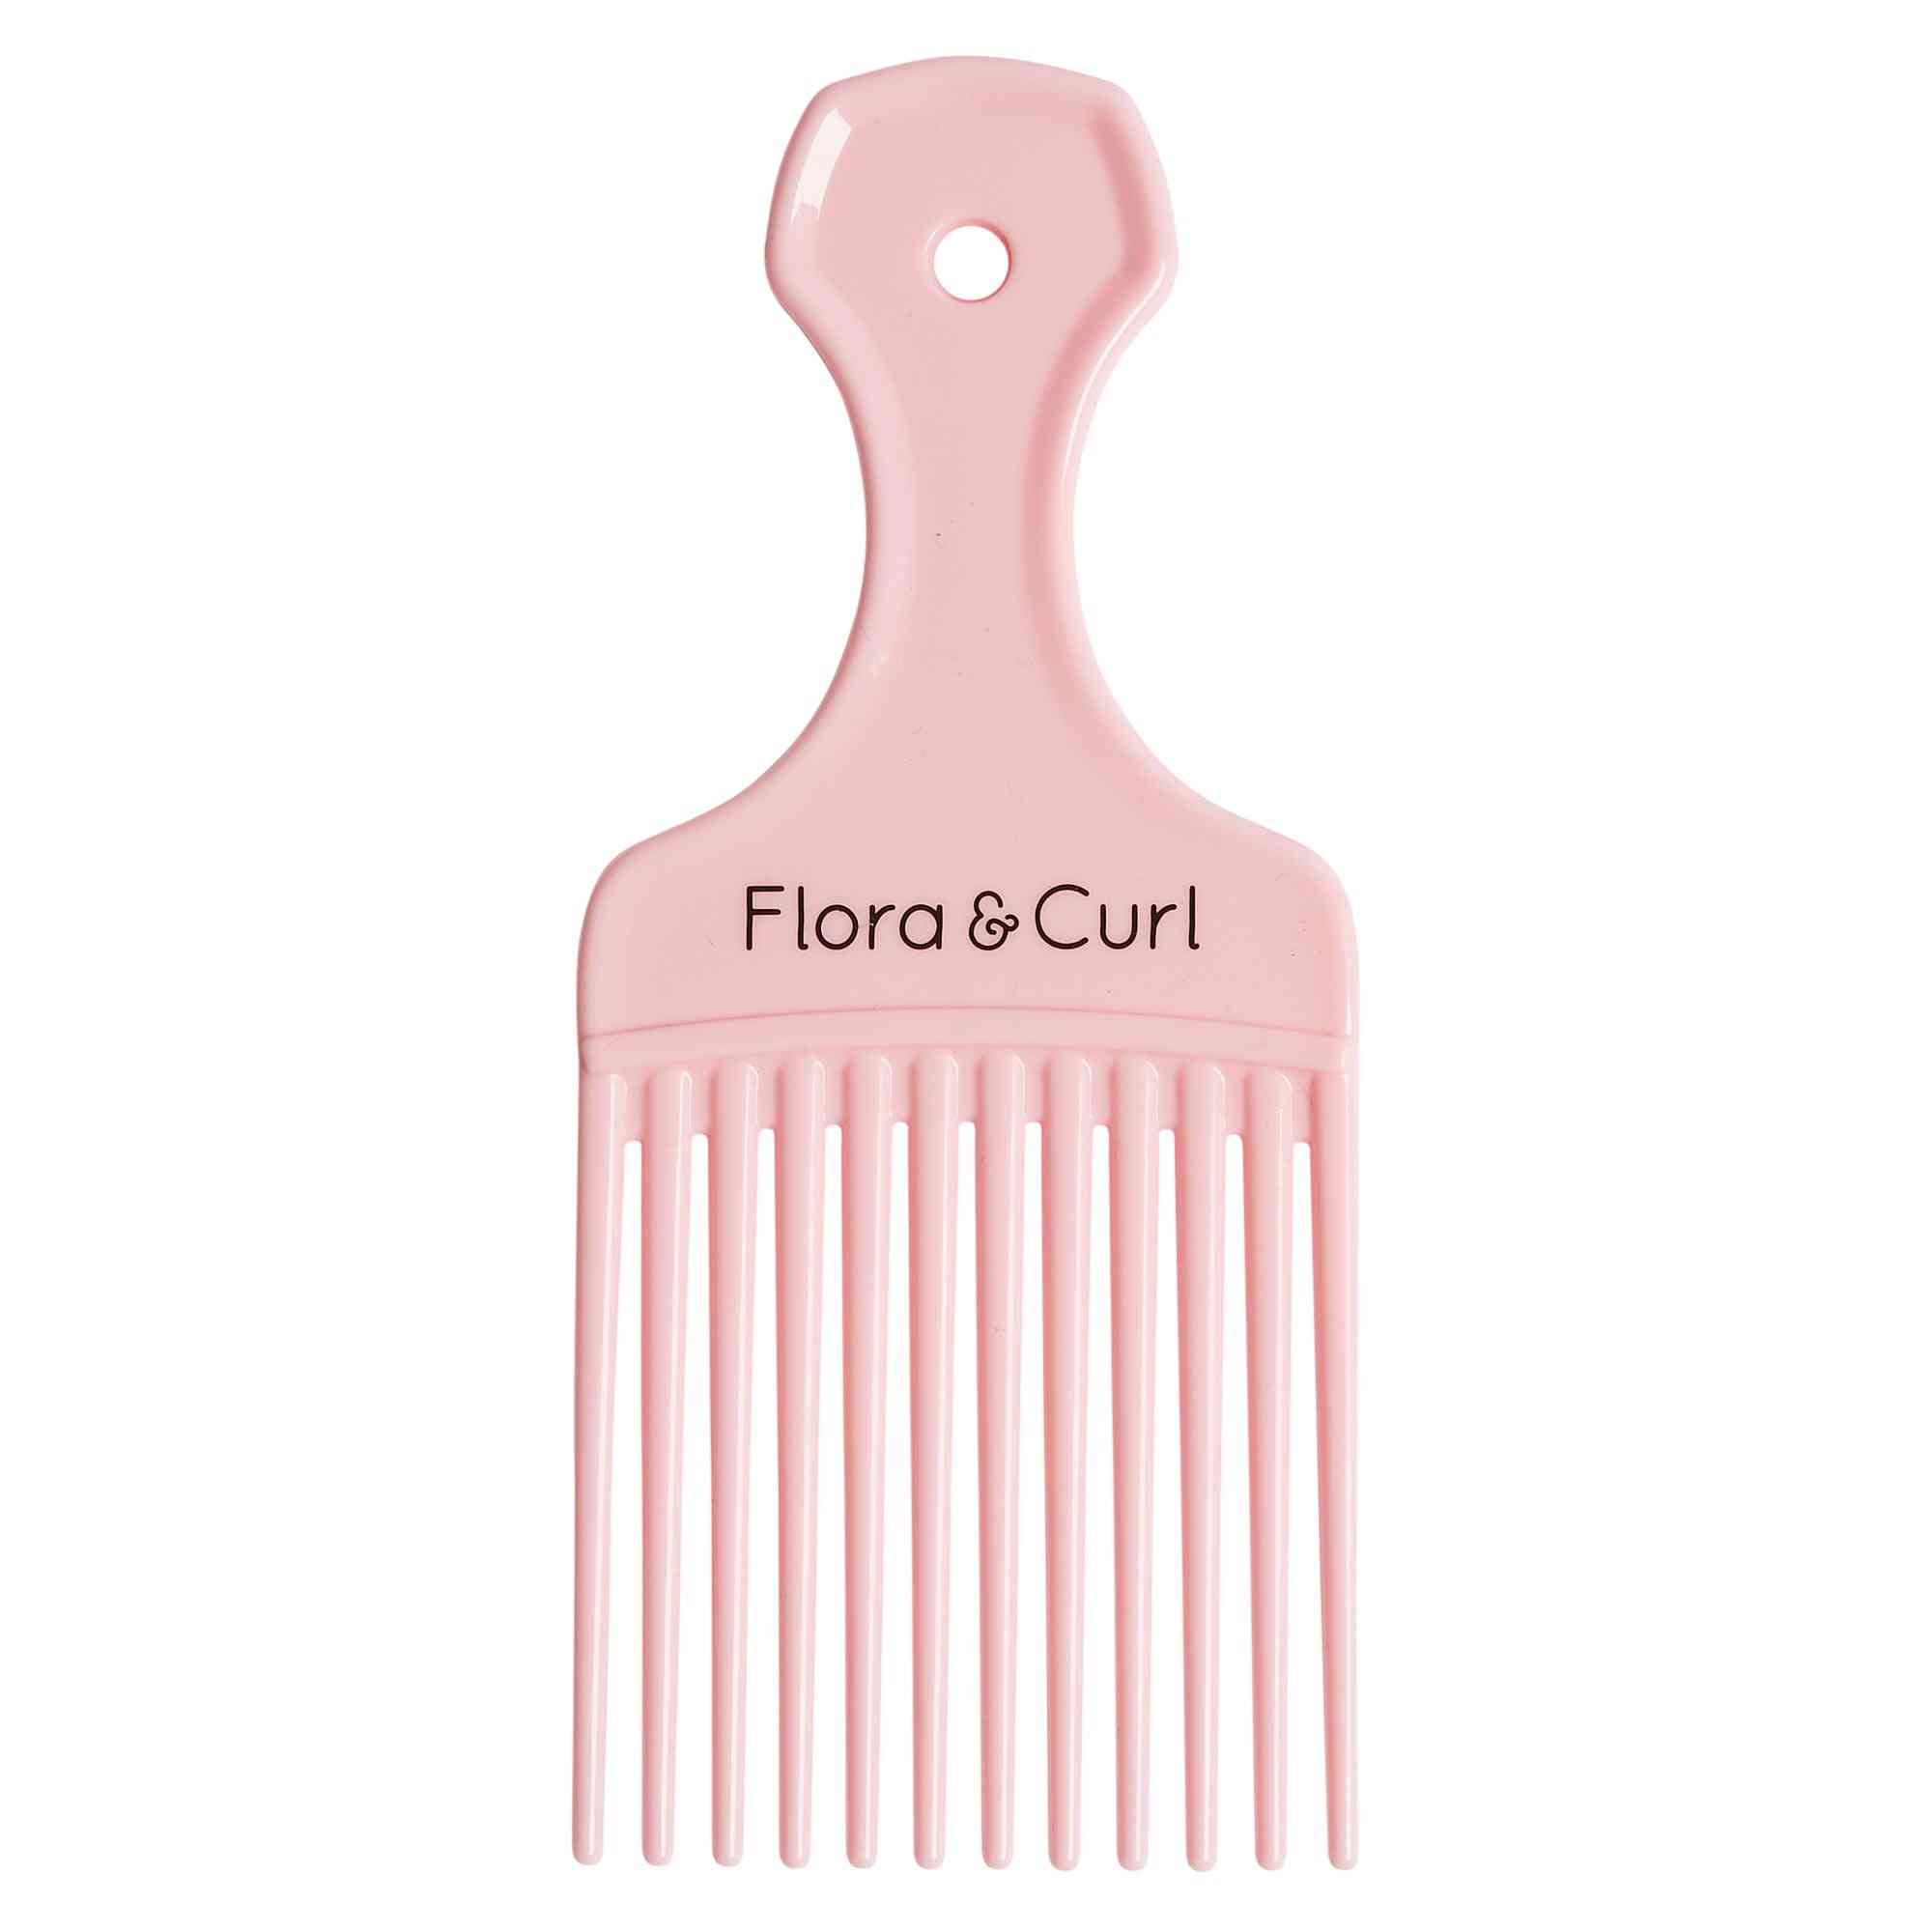 Flora  curl gentle fro pick